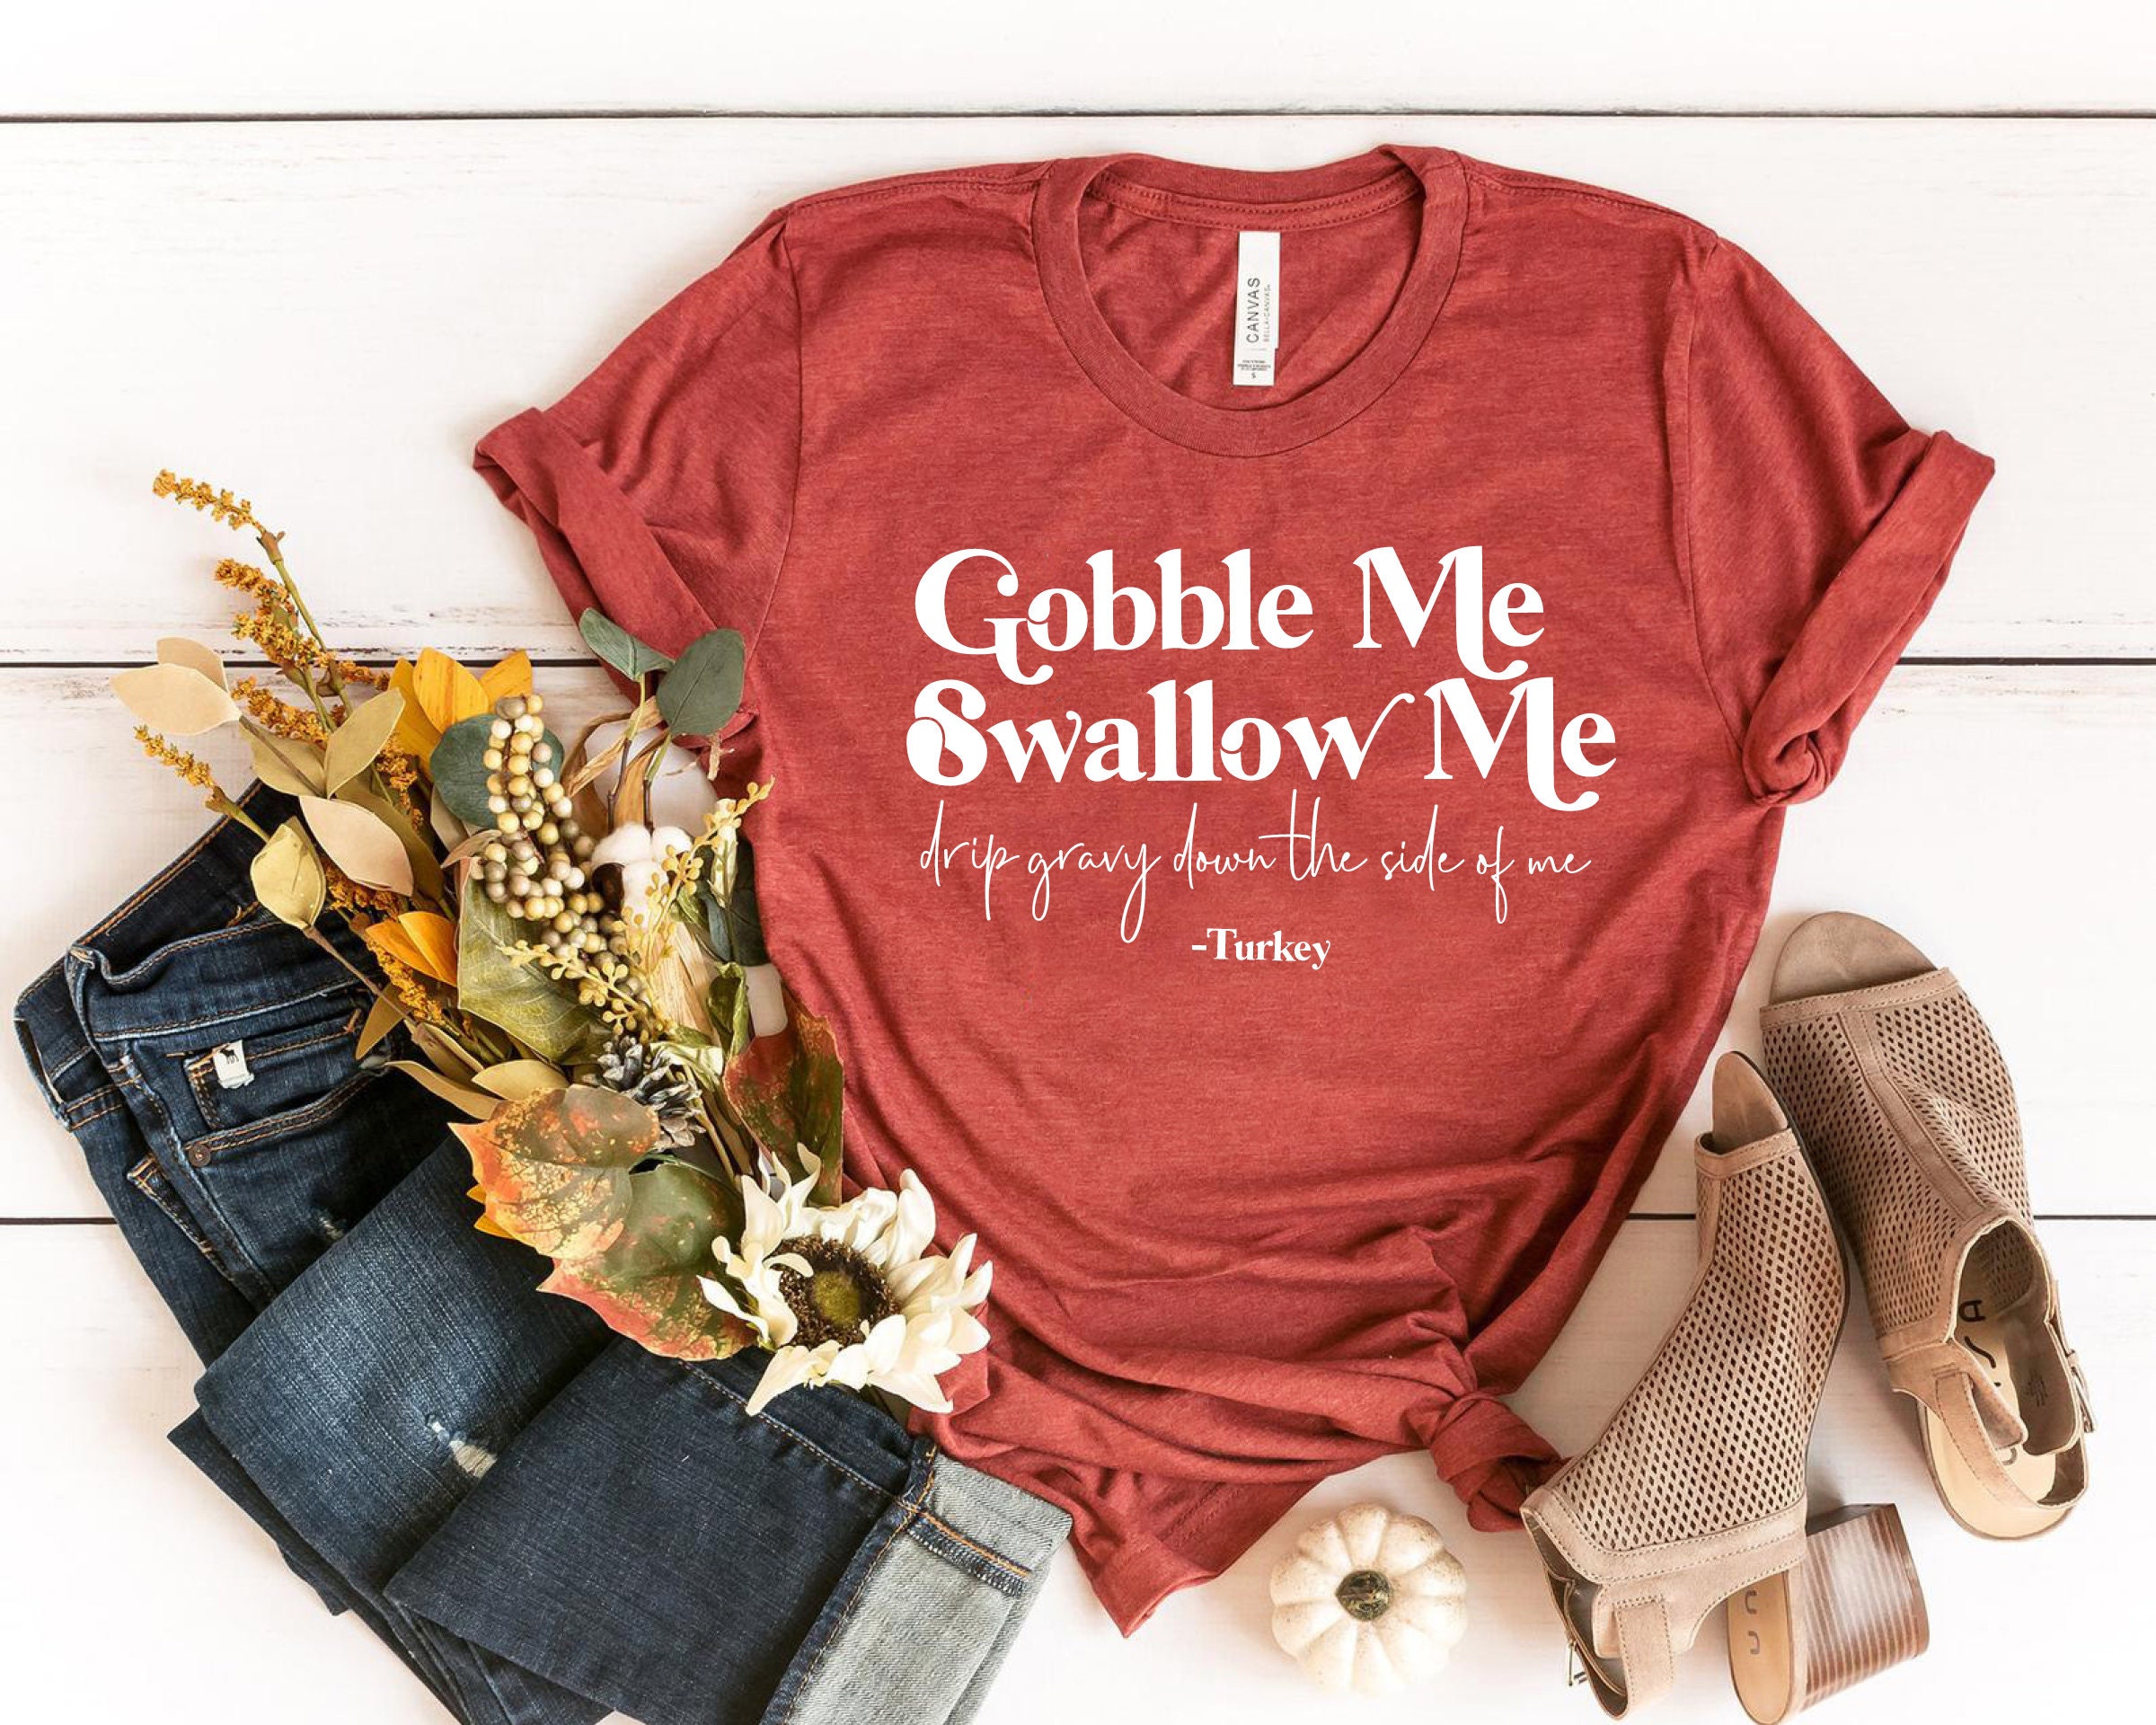 Discover Gobble Me Swallow Me Drip Gravy Down the Side of Me Tee Shirt Tshirt Fall Autumn Thanksgiving Tik Tok Saying Phrase Funny Gift Turkey